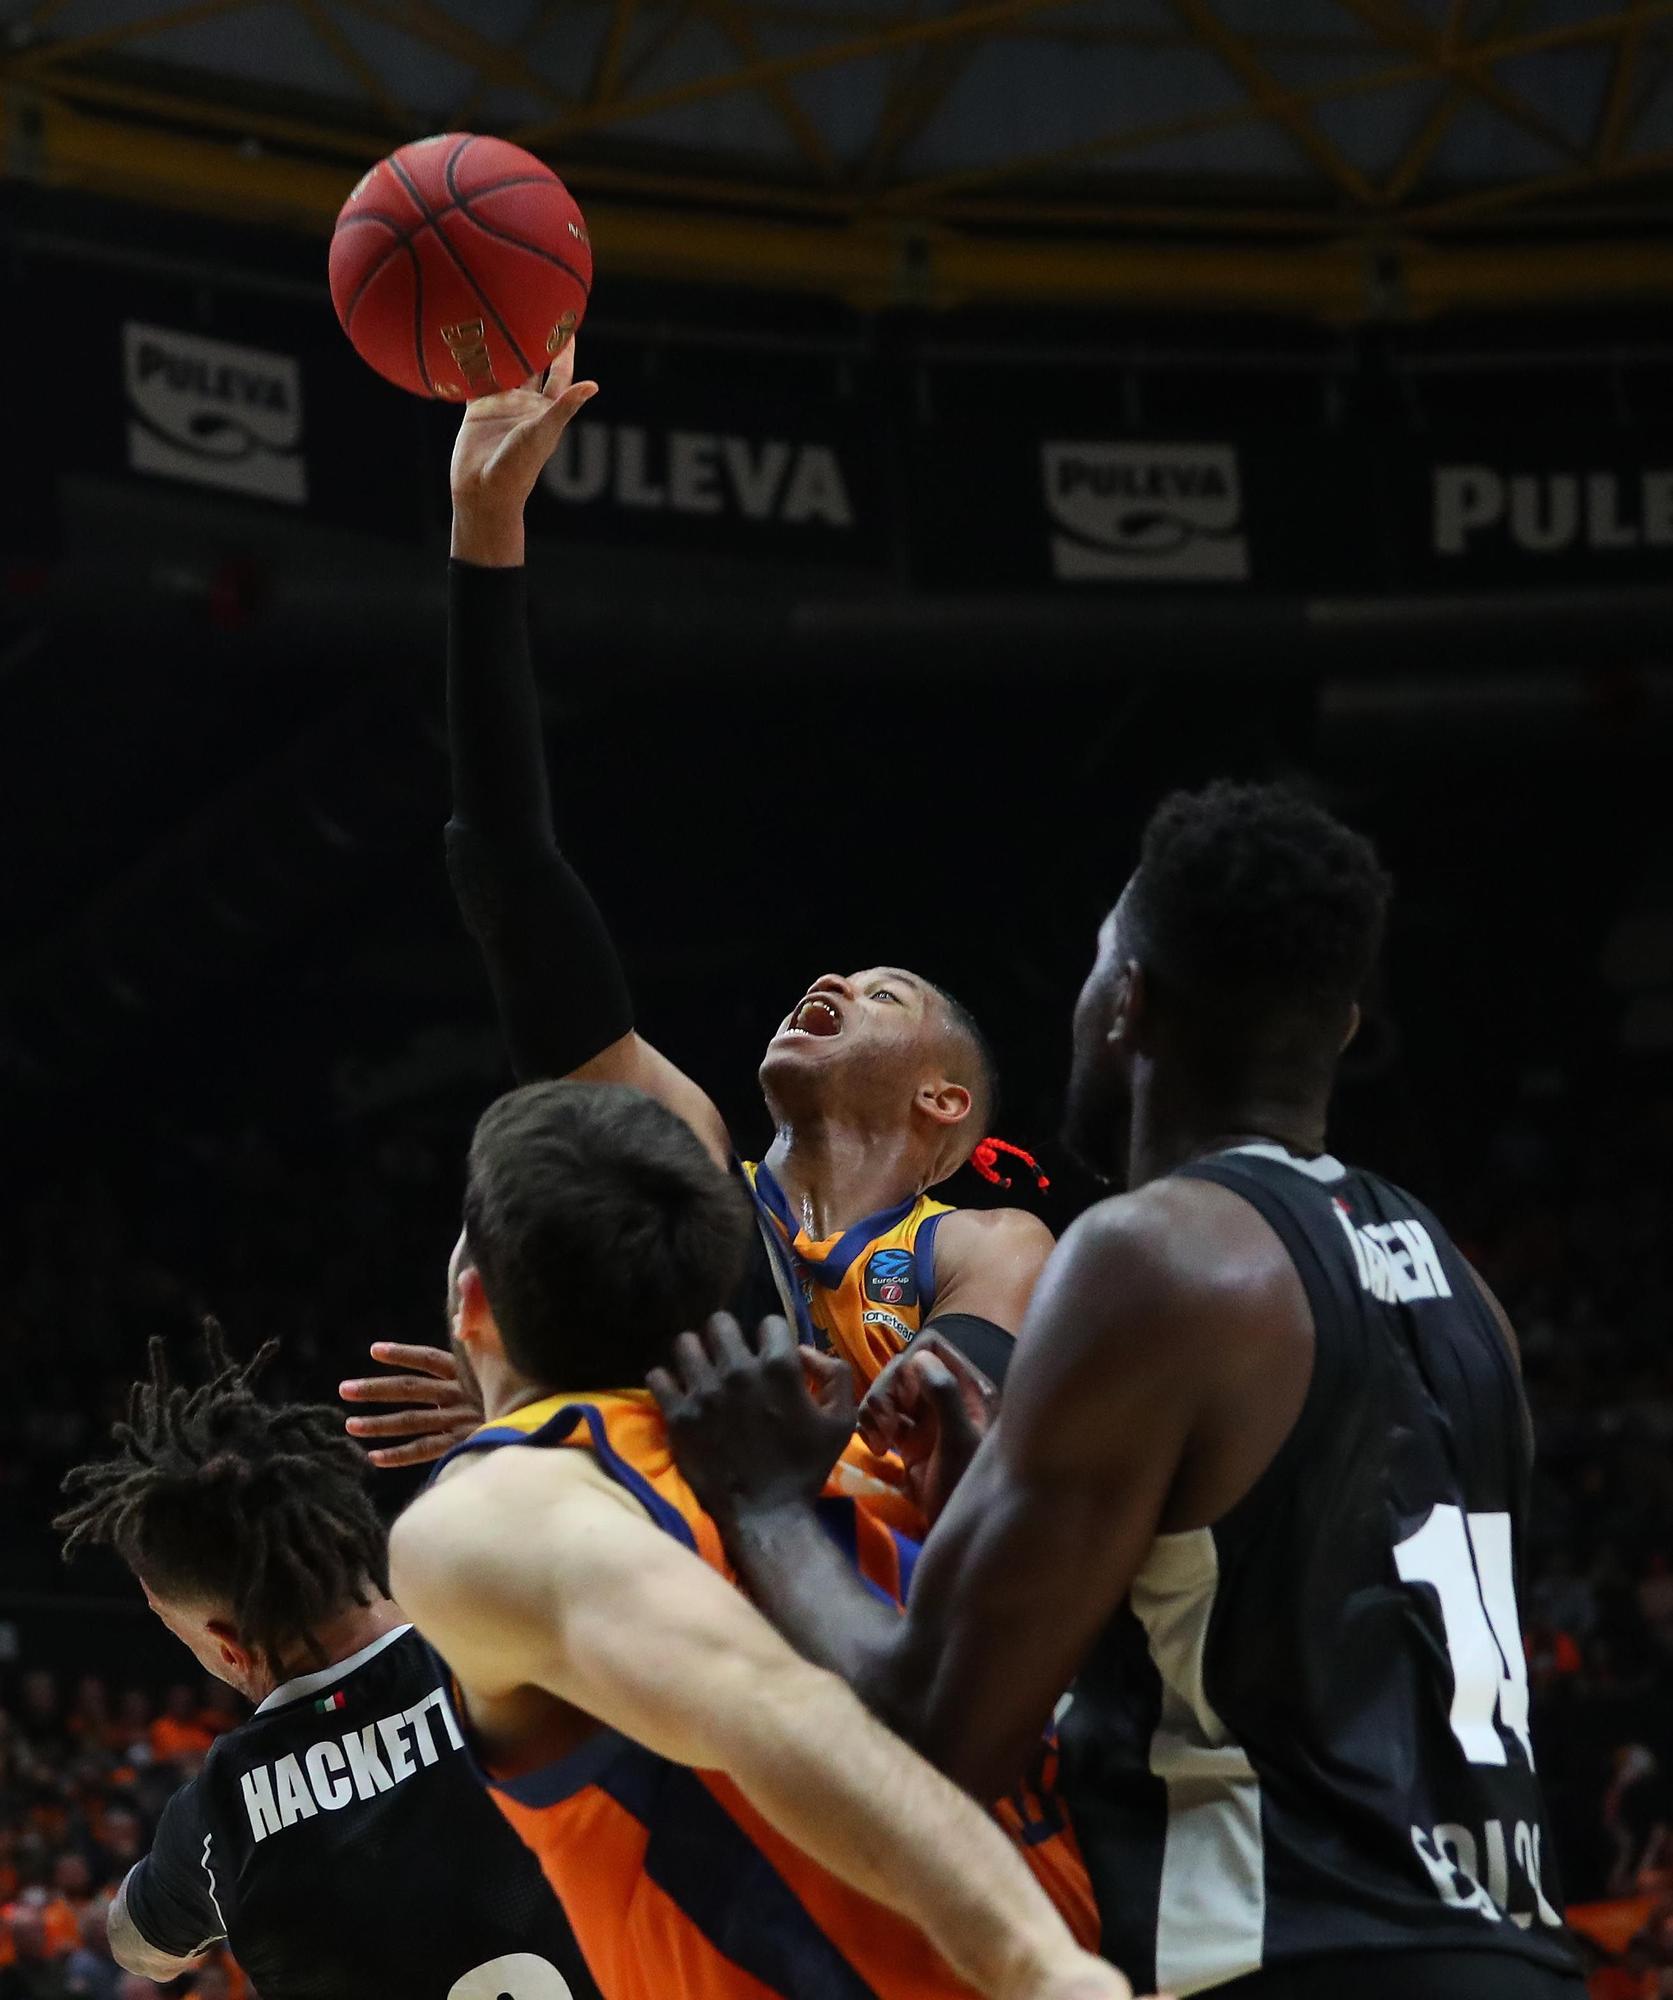 Valencia Basket vs Virtus Bologna semifinal de la Eurocup